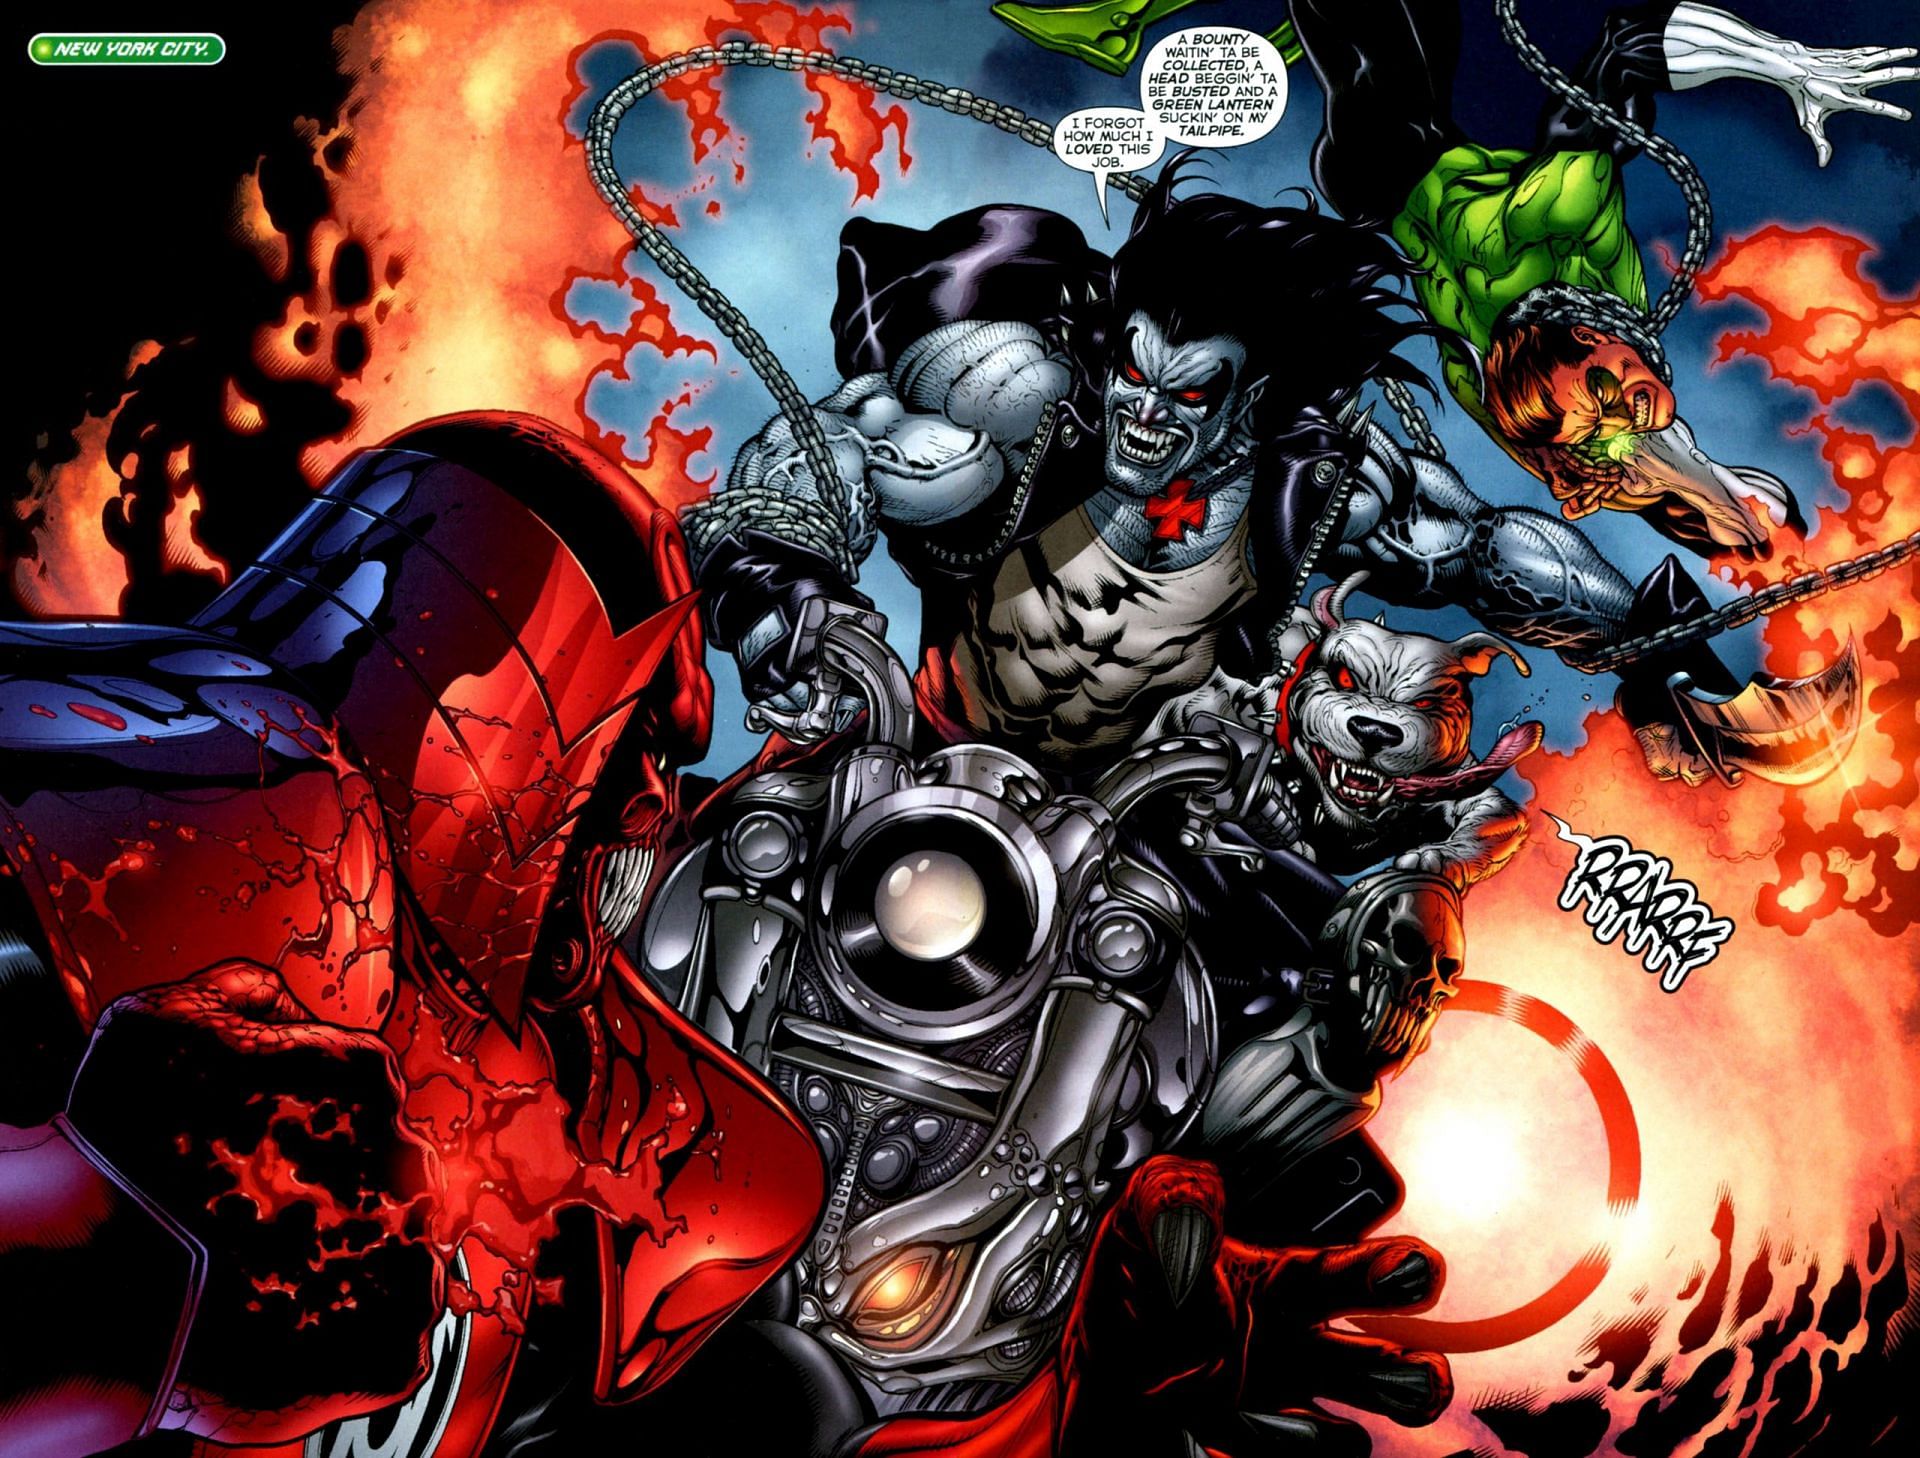 Lobo alongside Hal Jordan in the fight against Atrocitus, leader of the Red Lanterns (Image via DC Comics)